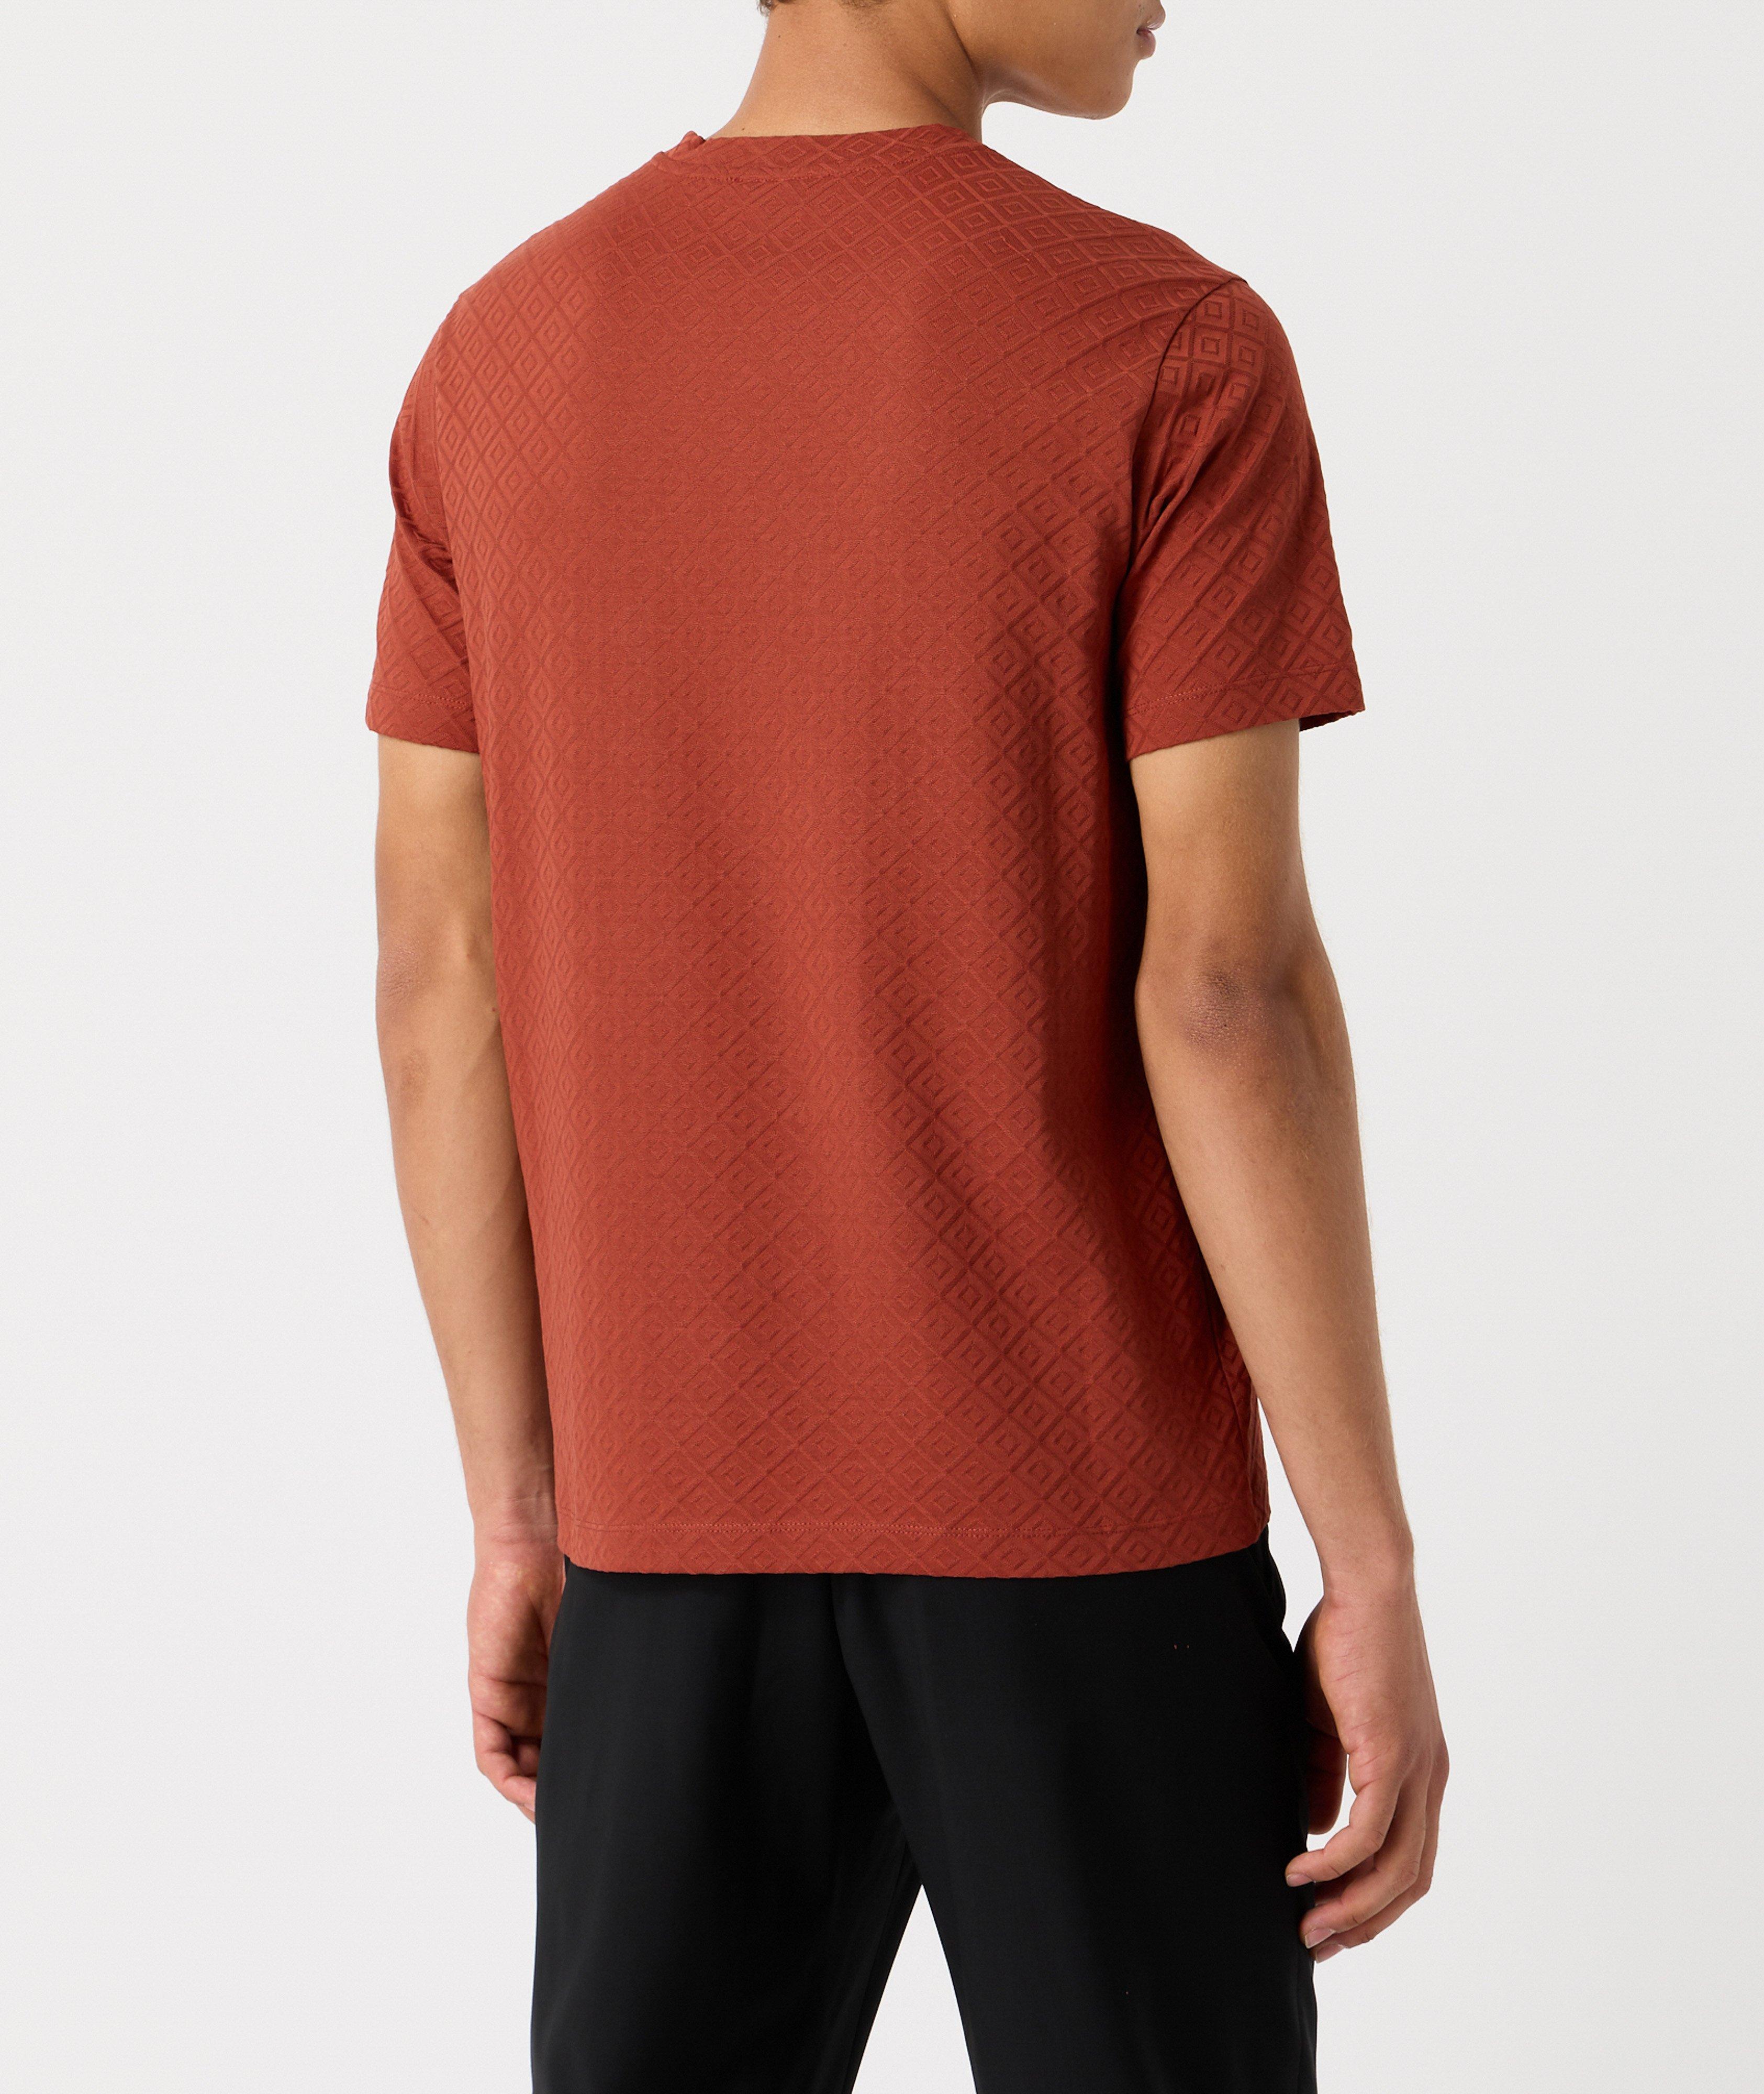 Jacquard Jersey Cotton T-Shirt image 2